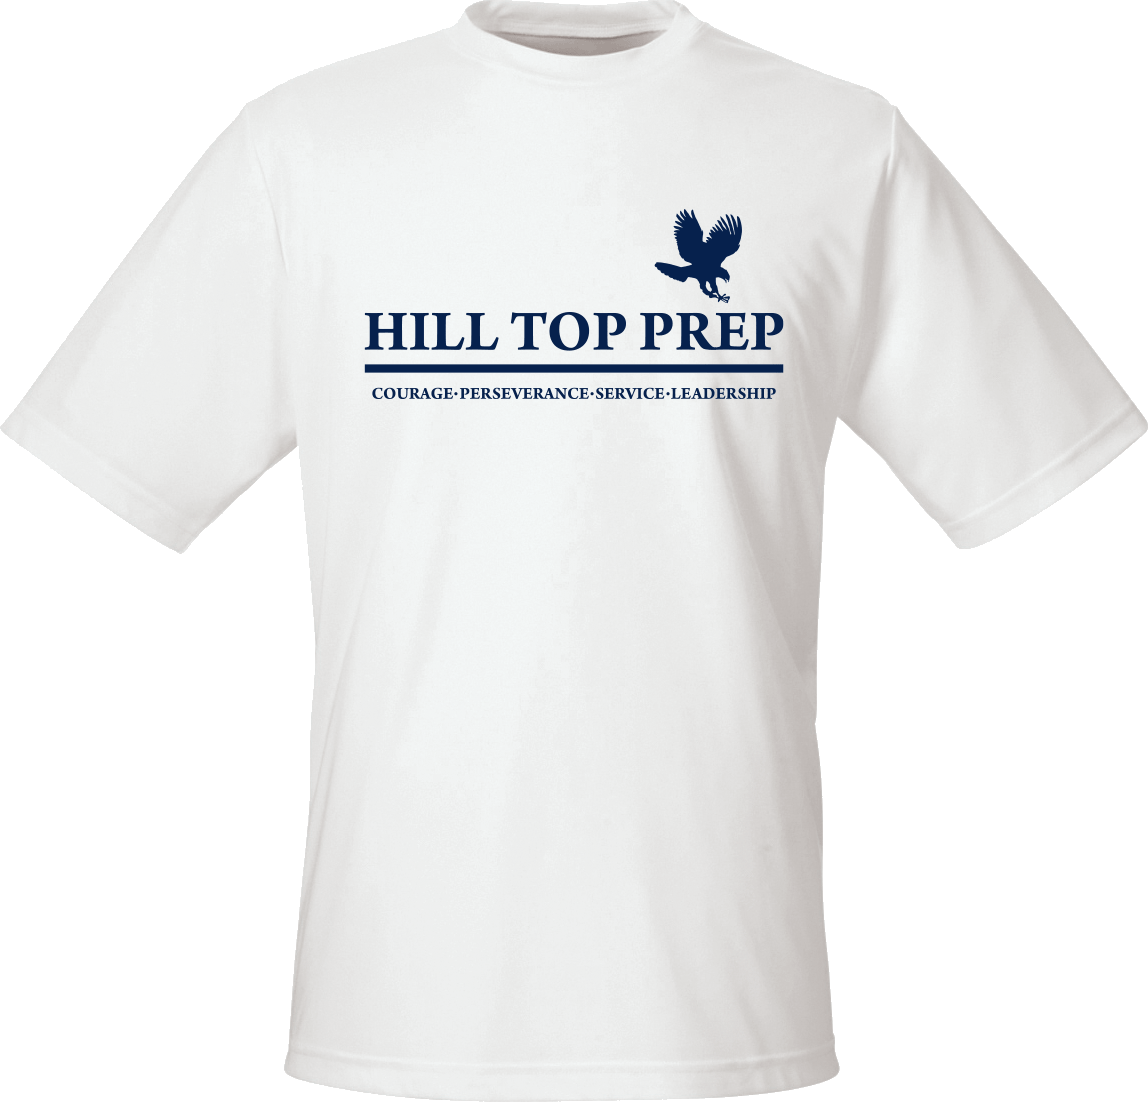 3. Hill Top Prep Printed Performance T-shirt